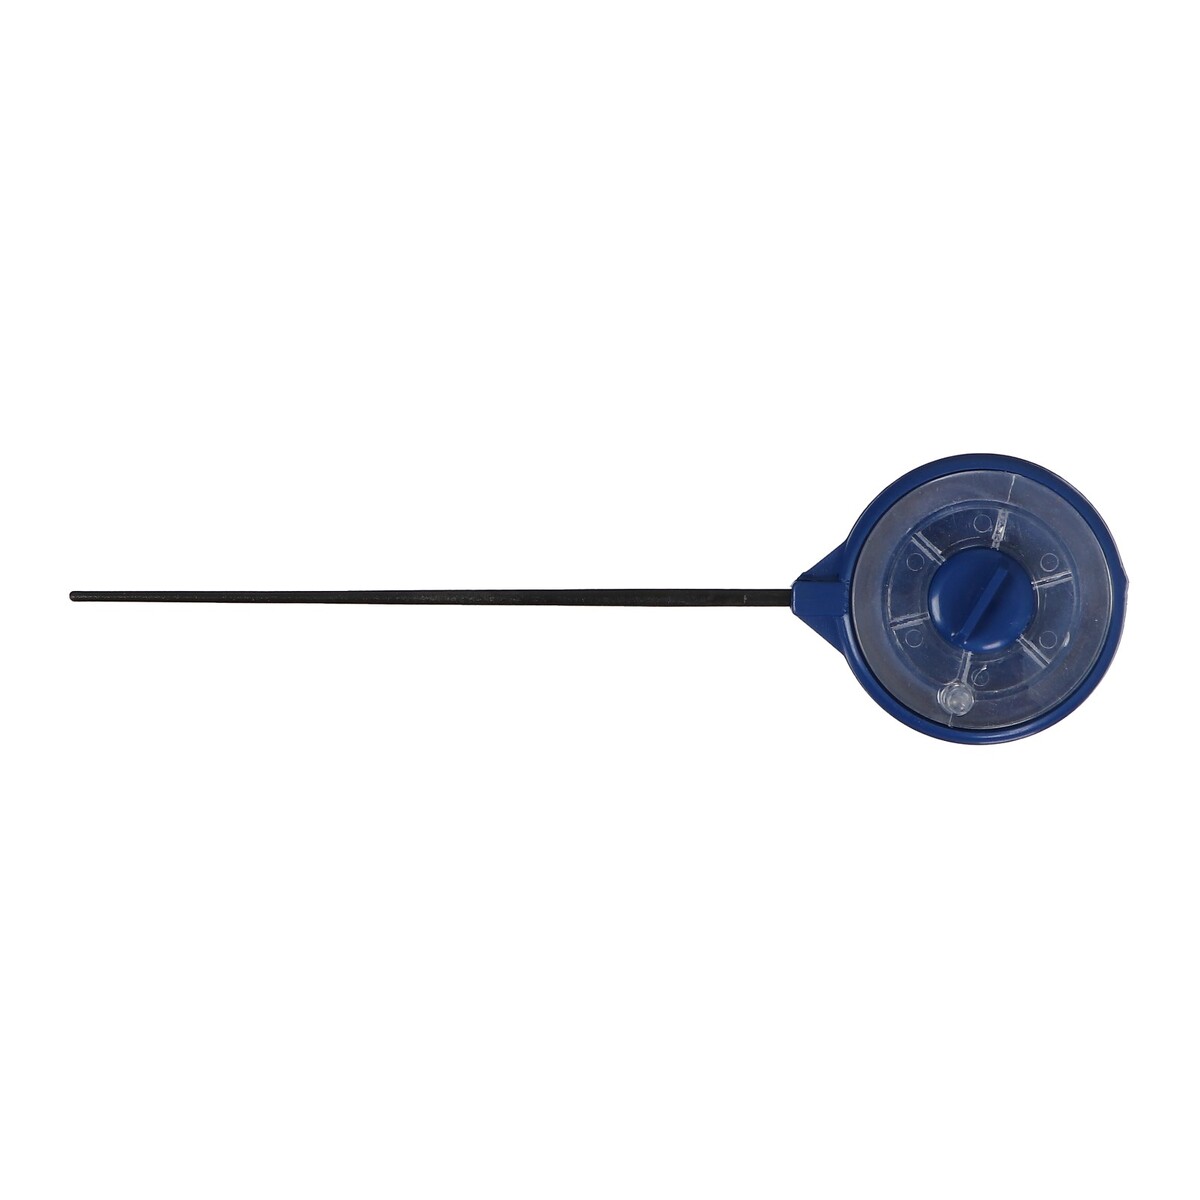 Удочка зимняя балалайка, цвет синий, hfb-22 удочка зимняя балалайка диаметр катушки 4 см hfb 19